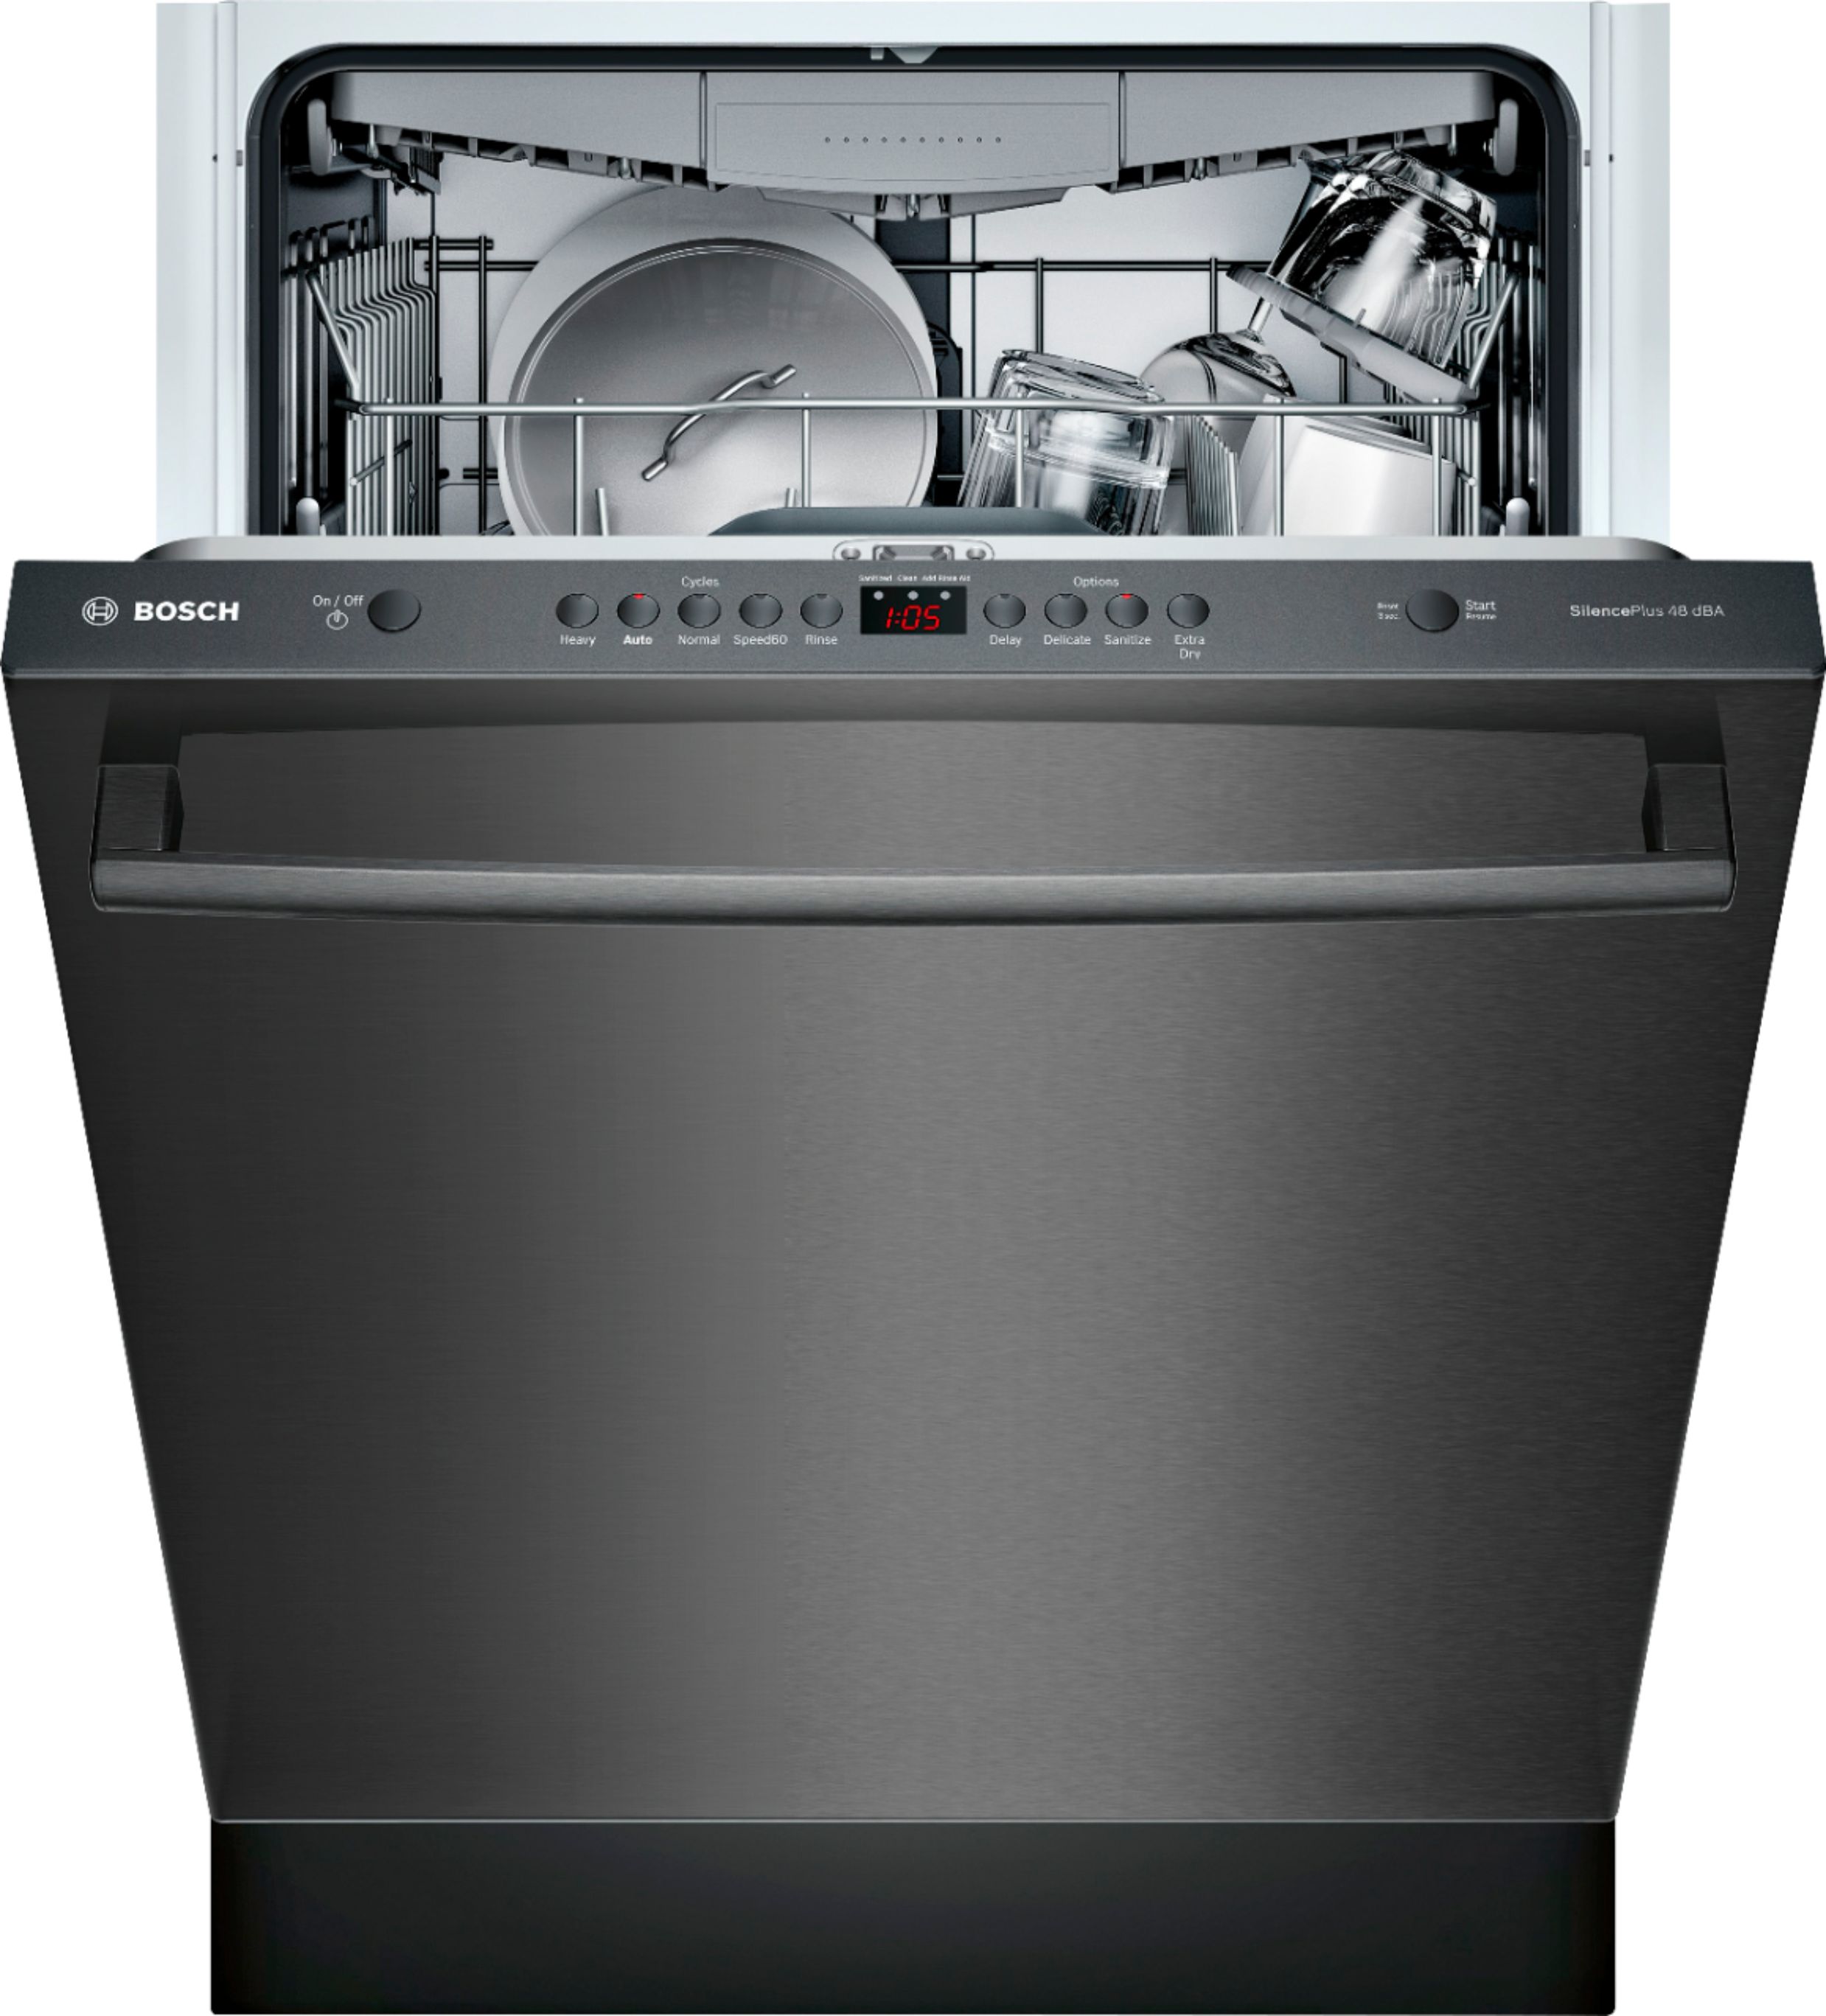 Bosch - 100 Series 24" Top Control Built-In Dishwasher - Black Bosch 24 Inch Dishwasher Stainless Steel